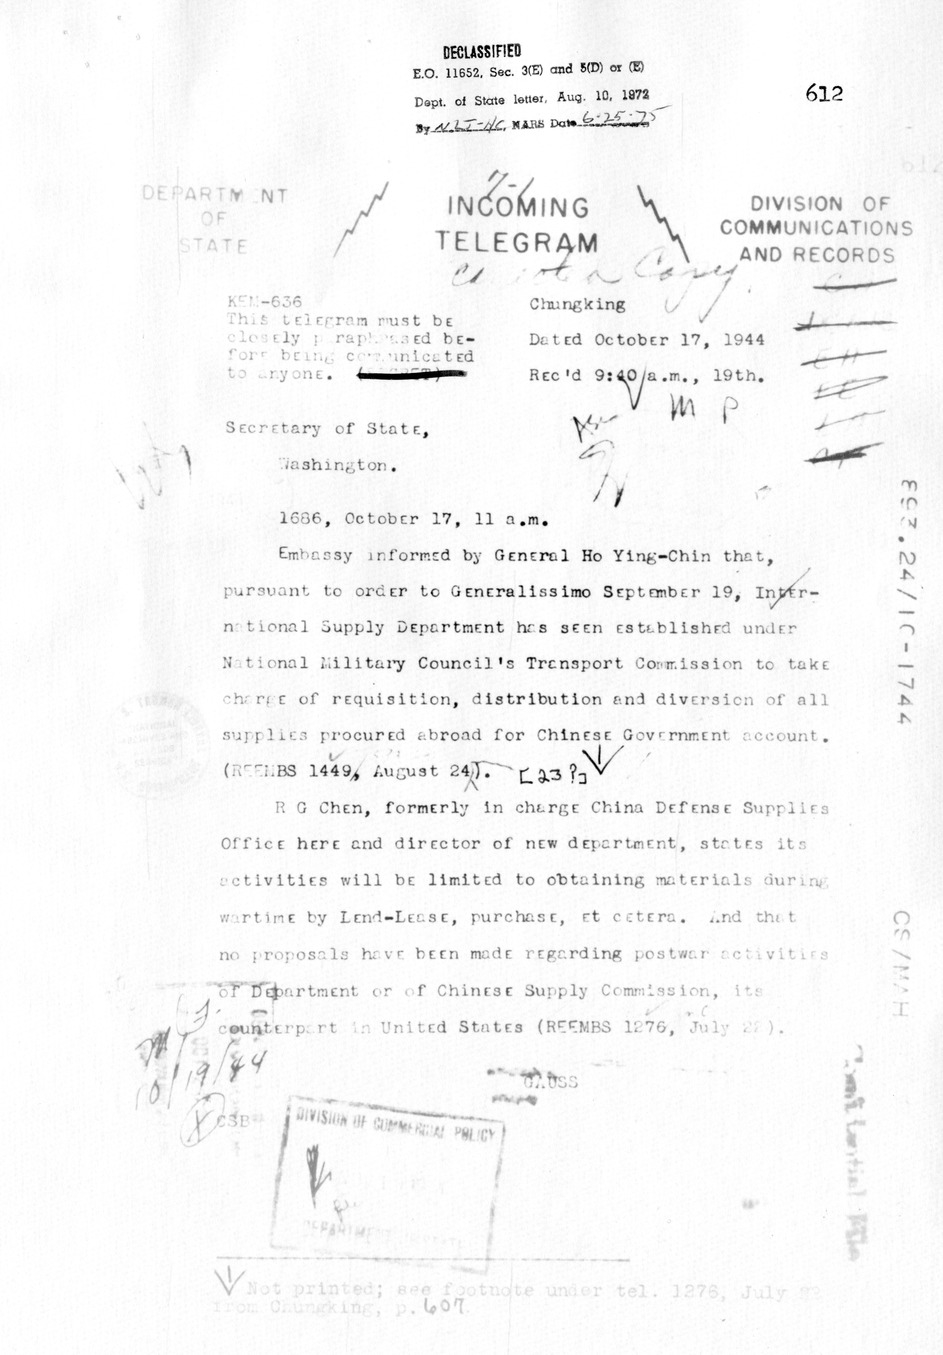 Telegram from Ambassador Clarence Gauss to Secretary of State Cordell Hull